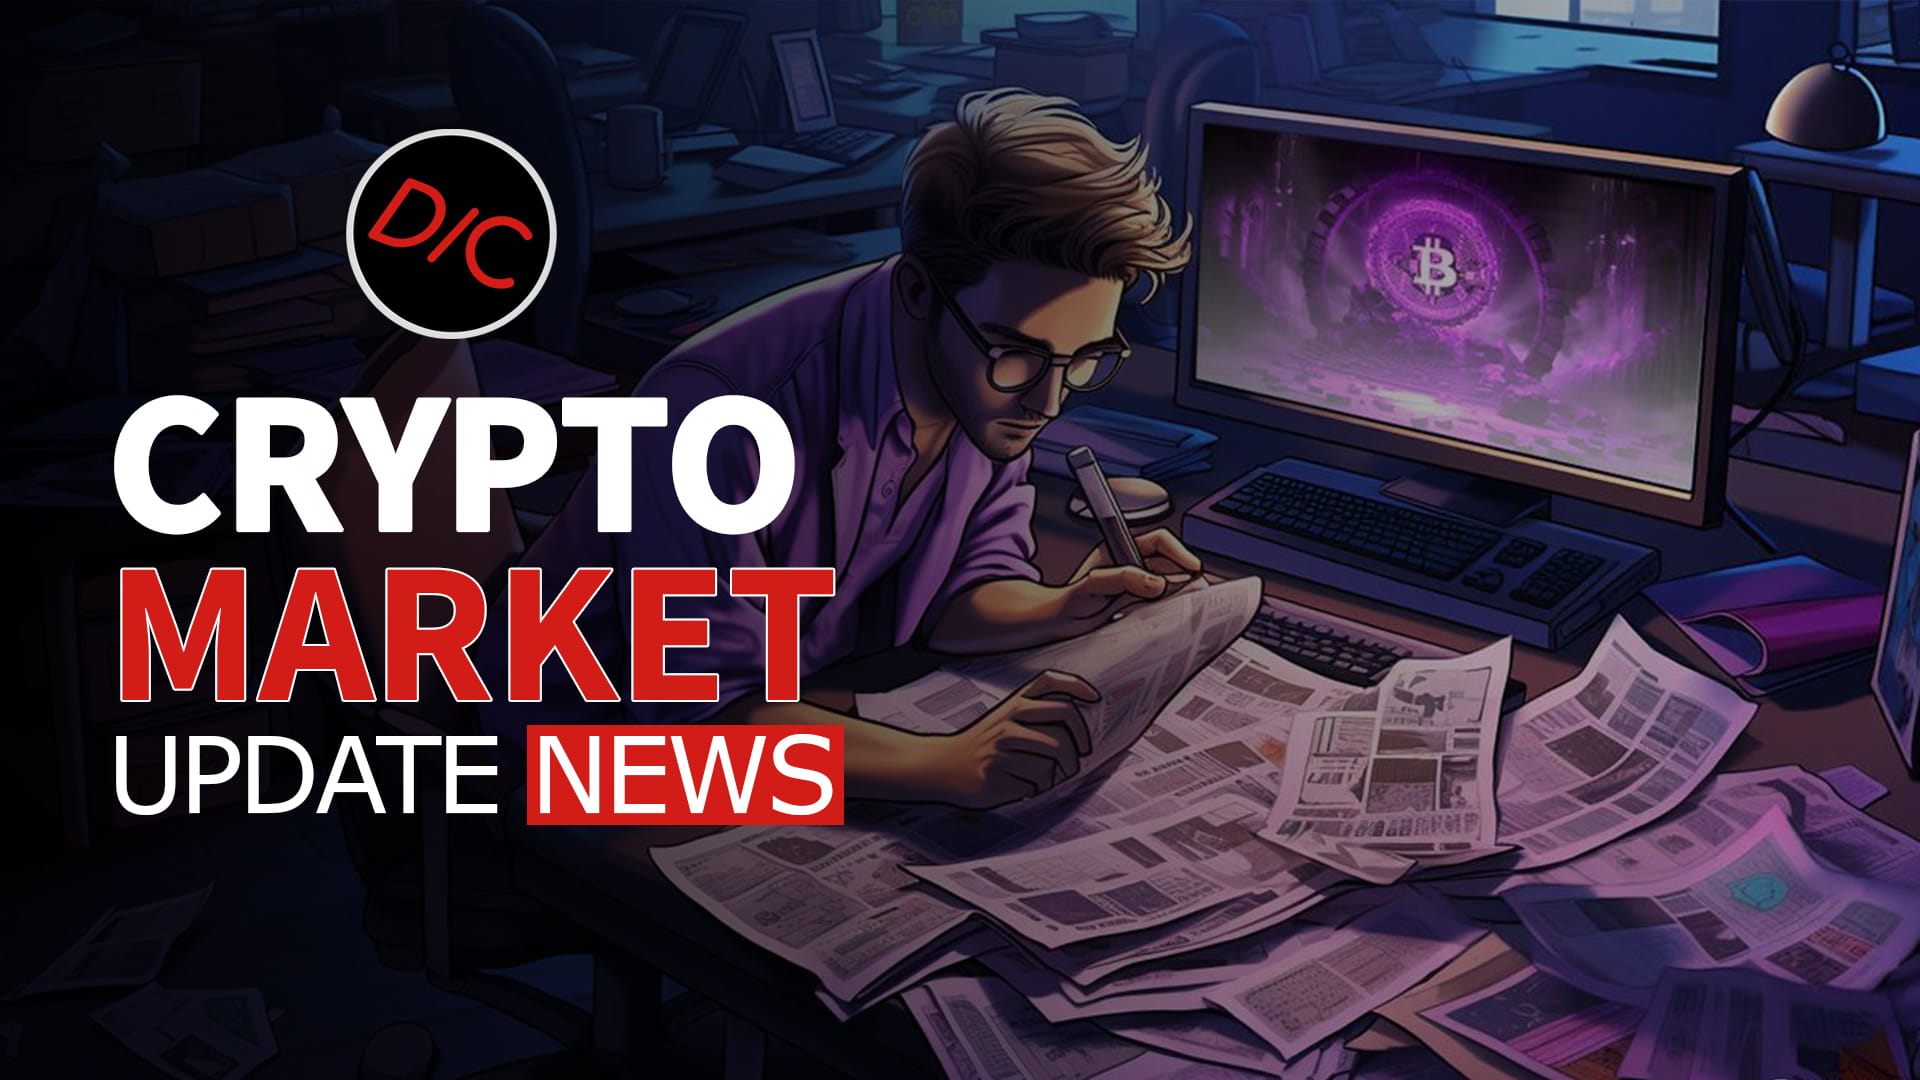 Crypto market update news | Free crypto box party